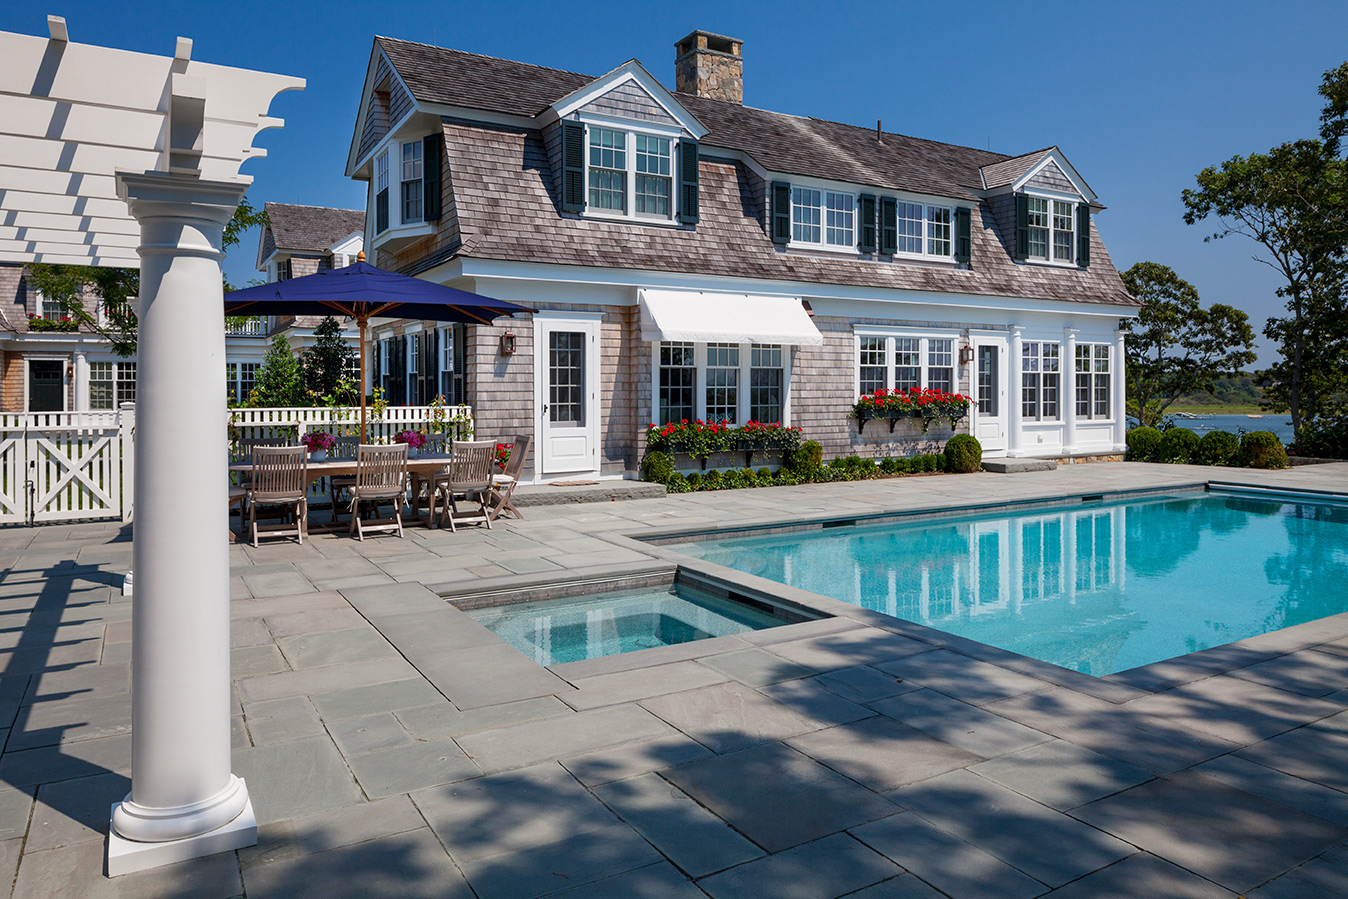 Residential (New Construction) over 5,000 SF “Coastal New England Harbor House” Patrick Ahearn Architect